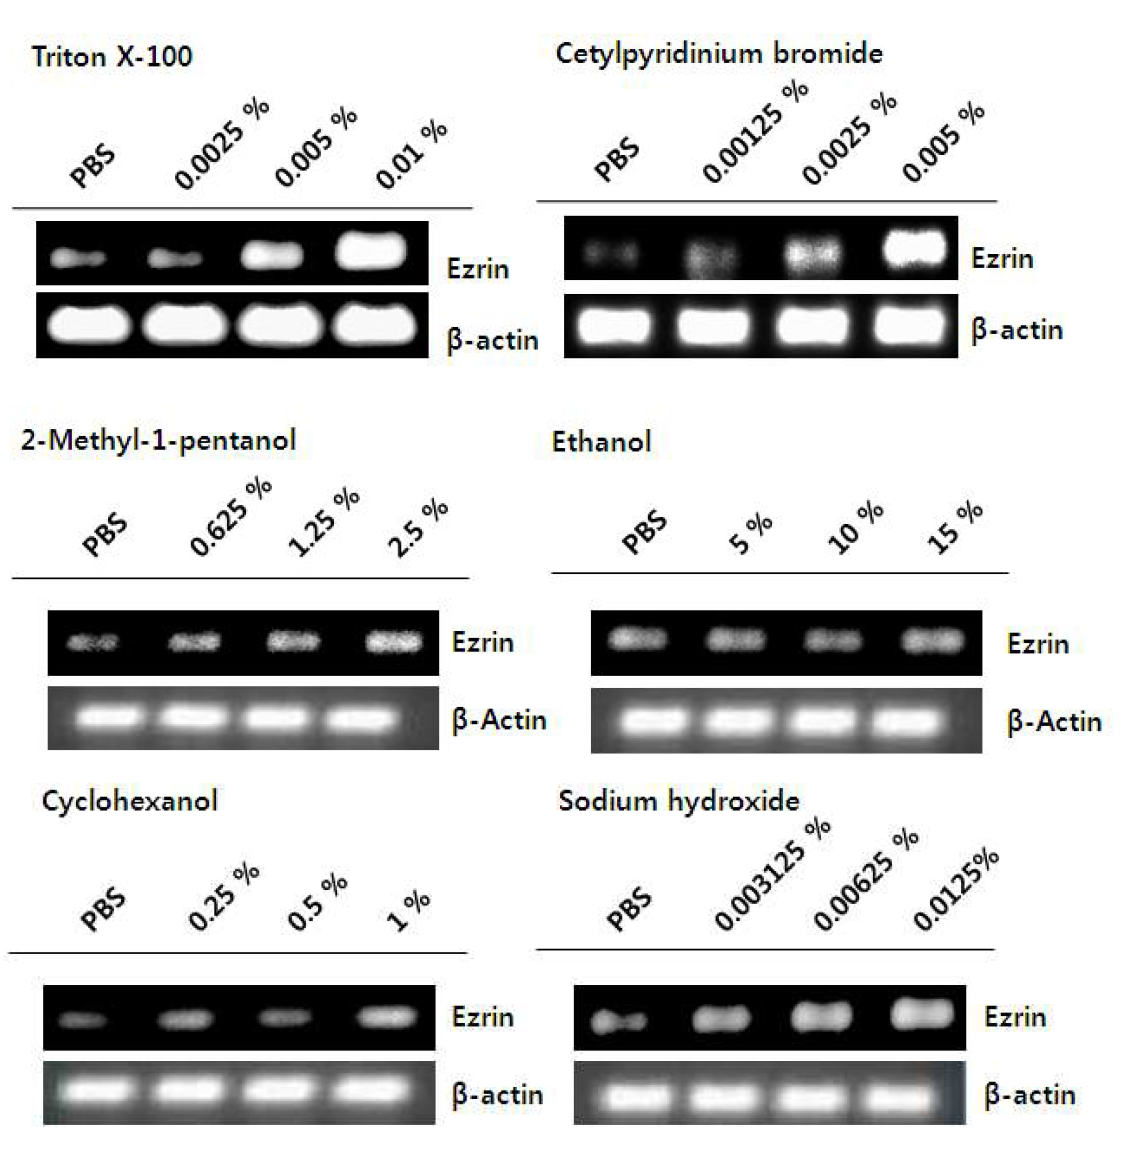 Immortalized corneal cell에 용량별 안자극 물질(triton X-100, cetylpyridinium bromide, 2-methyl-1-pentanol, ethanol, cyclohexanol, sodium hydroxide) 처리 후 ezrin의 mRNA 발현 변화 (RT-PCR)